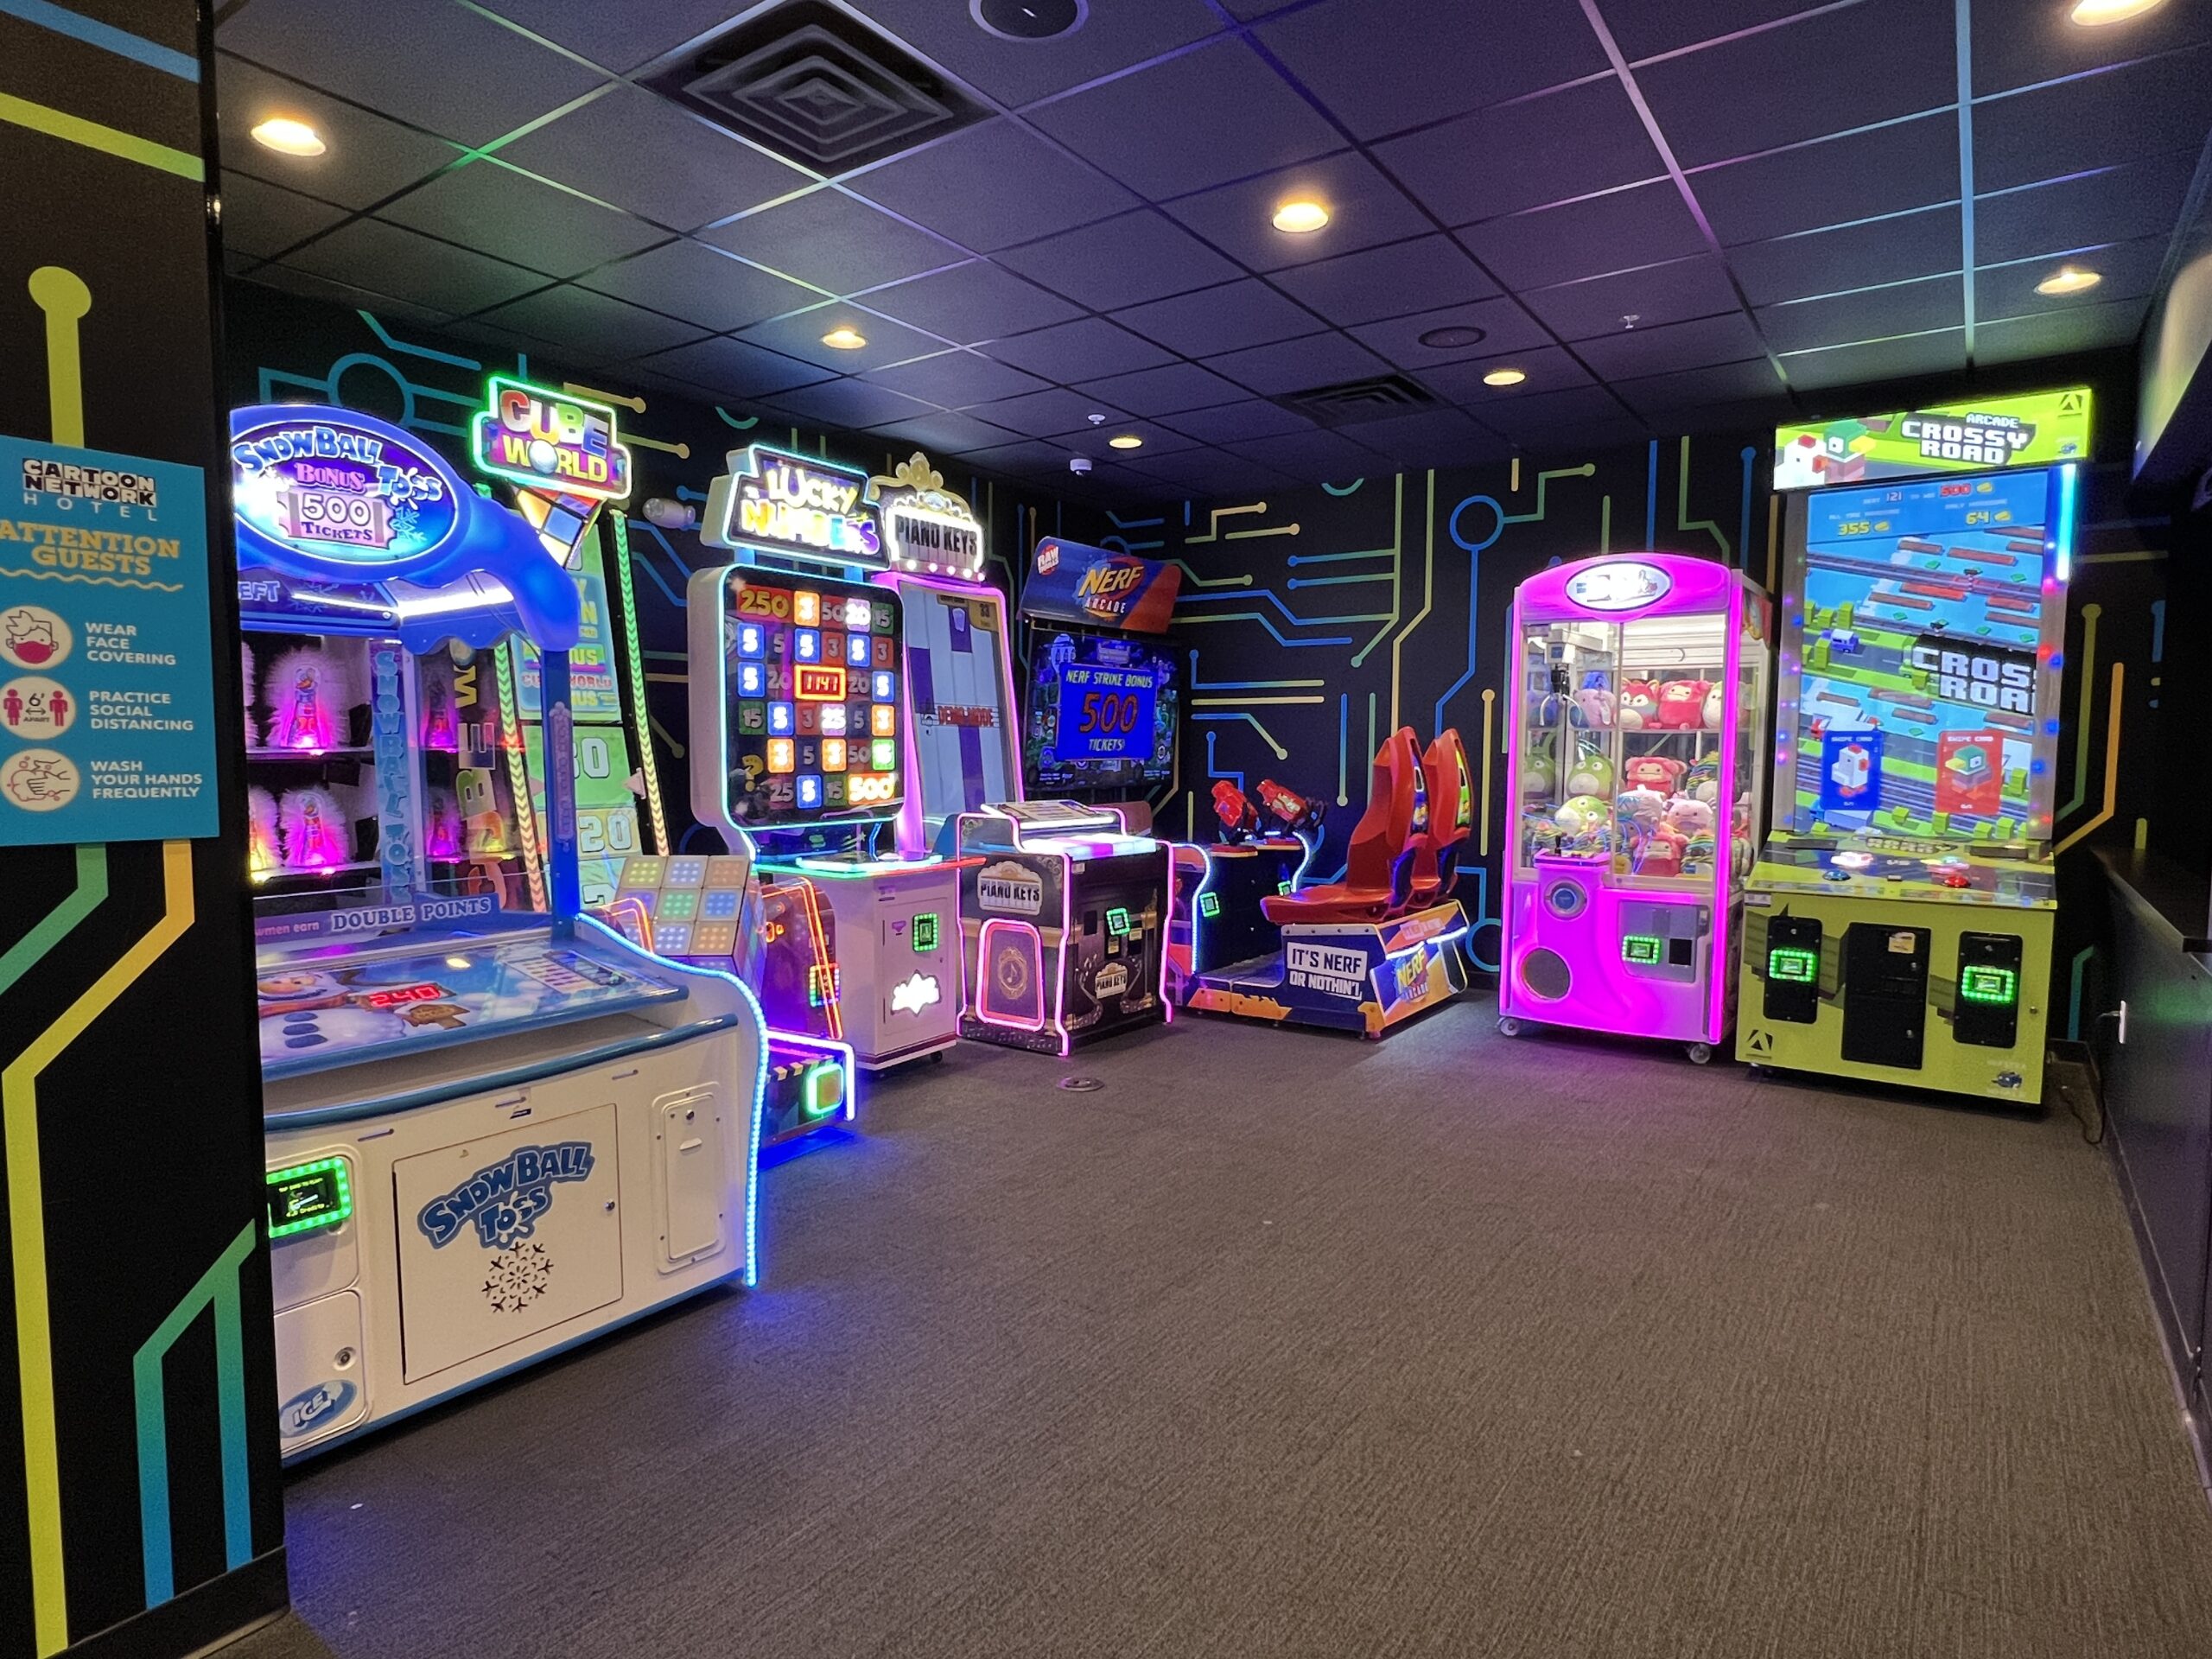 Ben 10 Omnicade Arcade games at Cartoon Network Hotel in Lancaster wide image